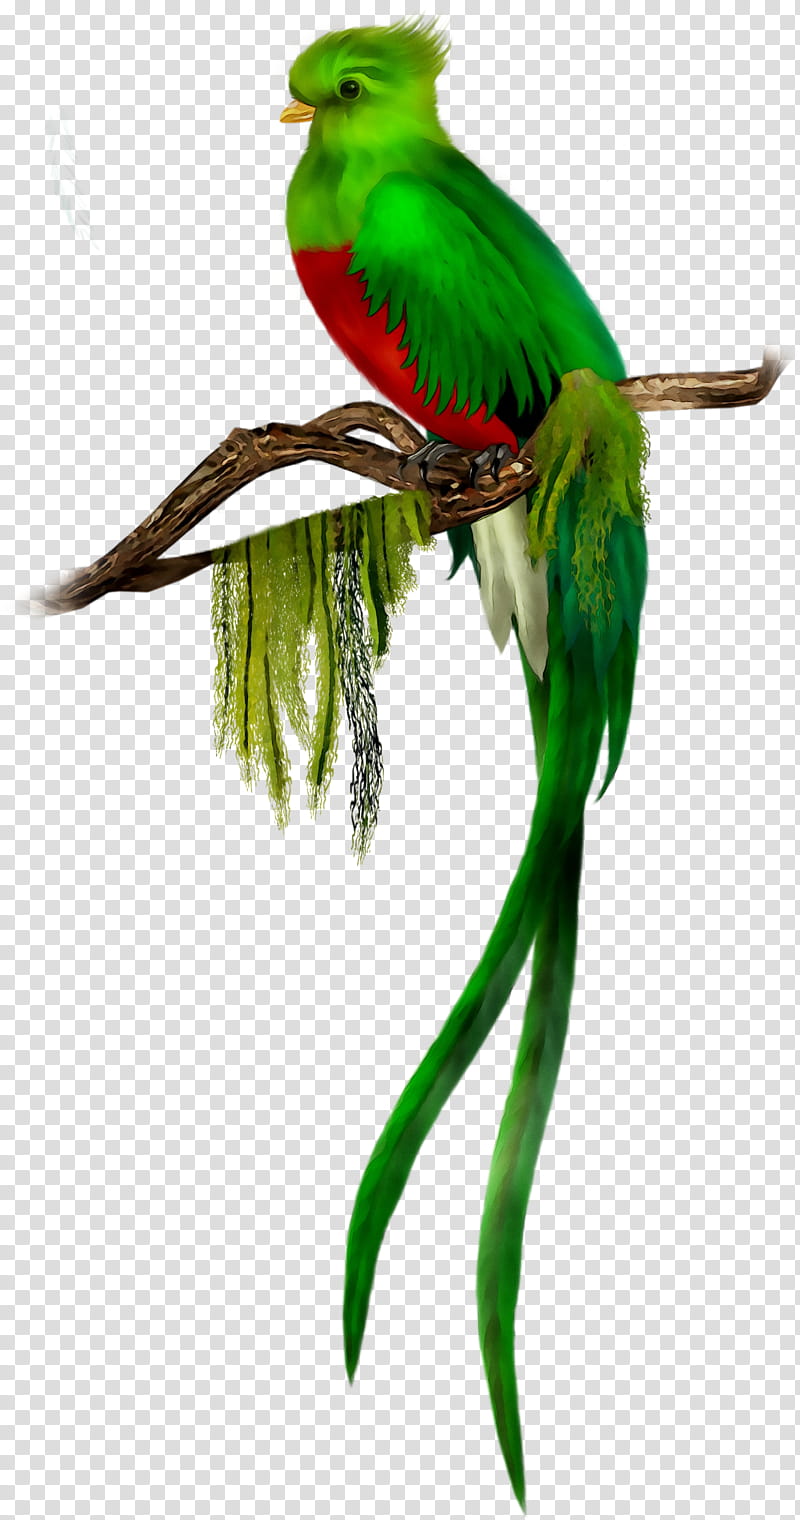 Bird Parrot, Quetzal, Resplendent Quetzal, El Quetzal, Macaw, Beak, True Parrot, Feather transparent background PNG clipart